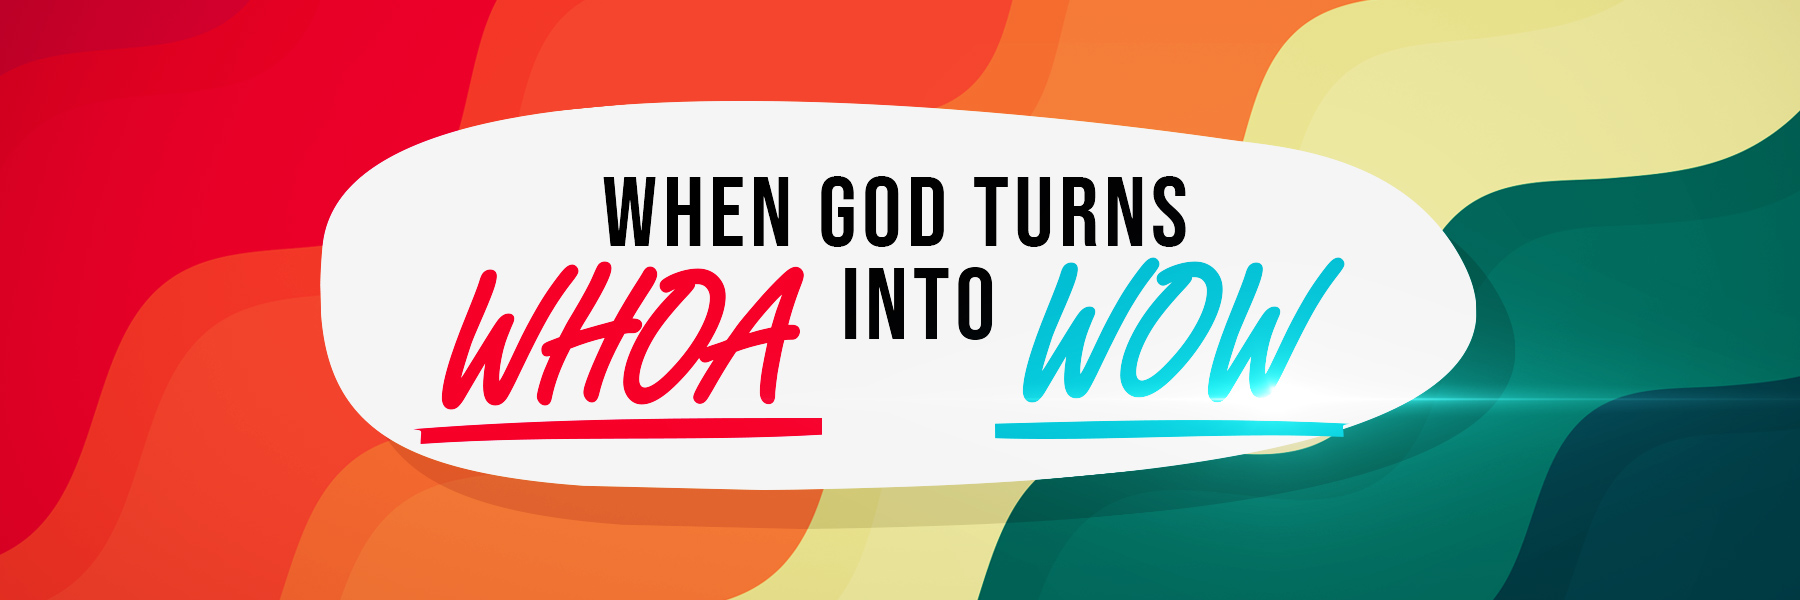 When God Turns Woah into WoW